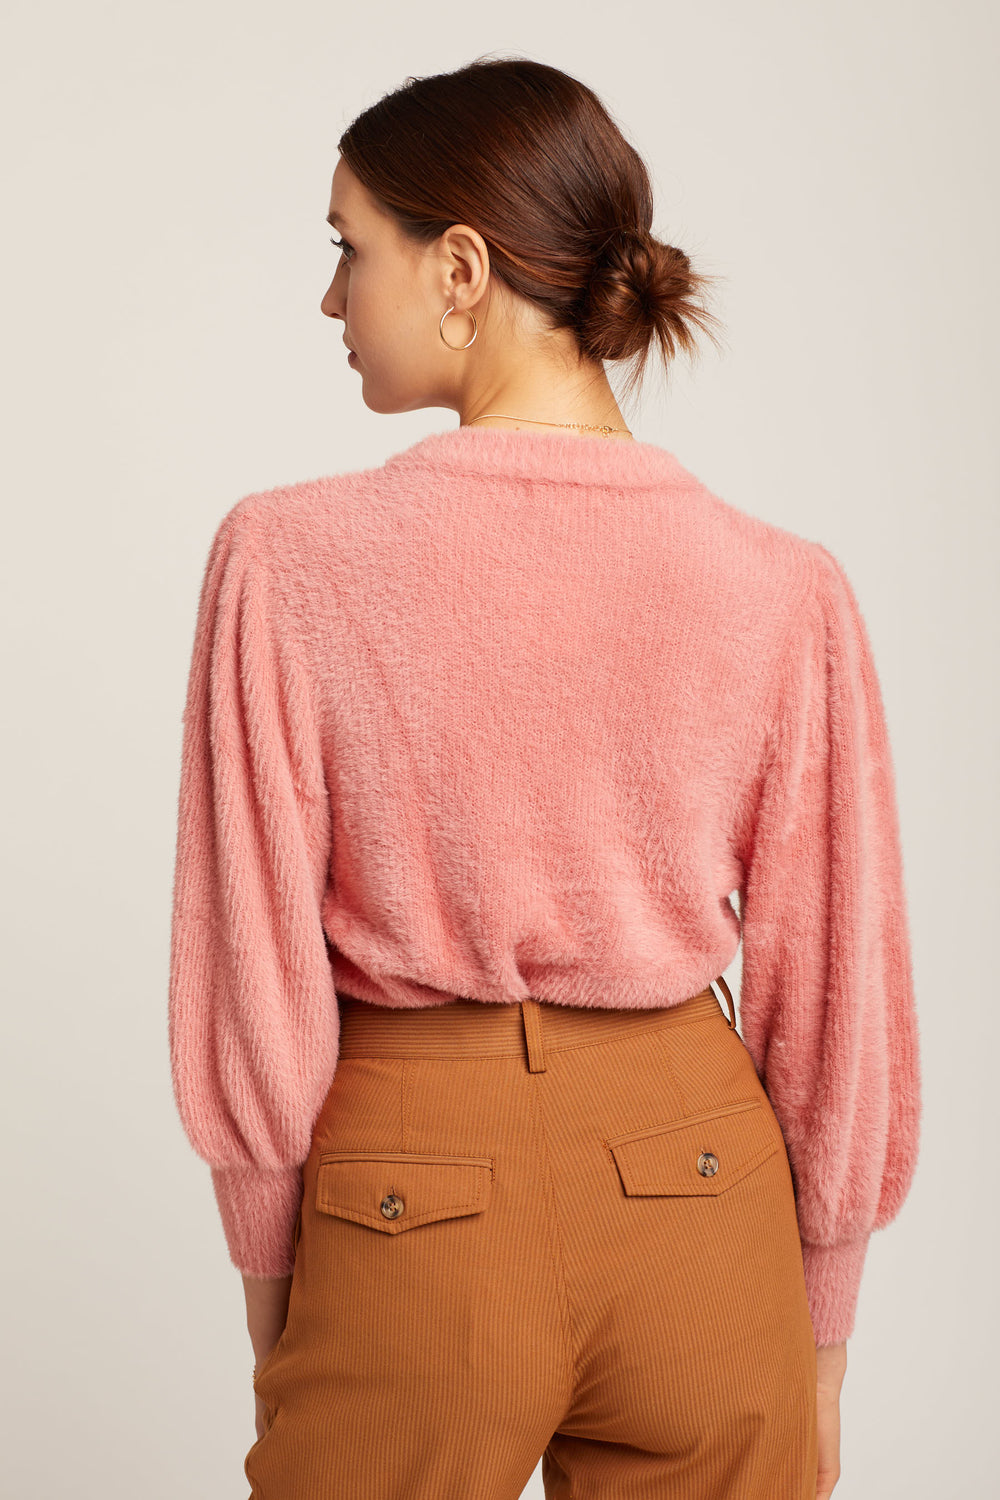 Rose Whitney Sweater